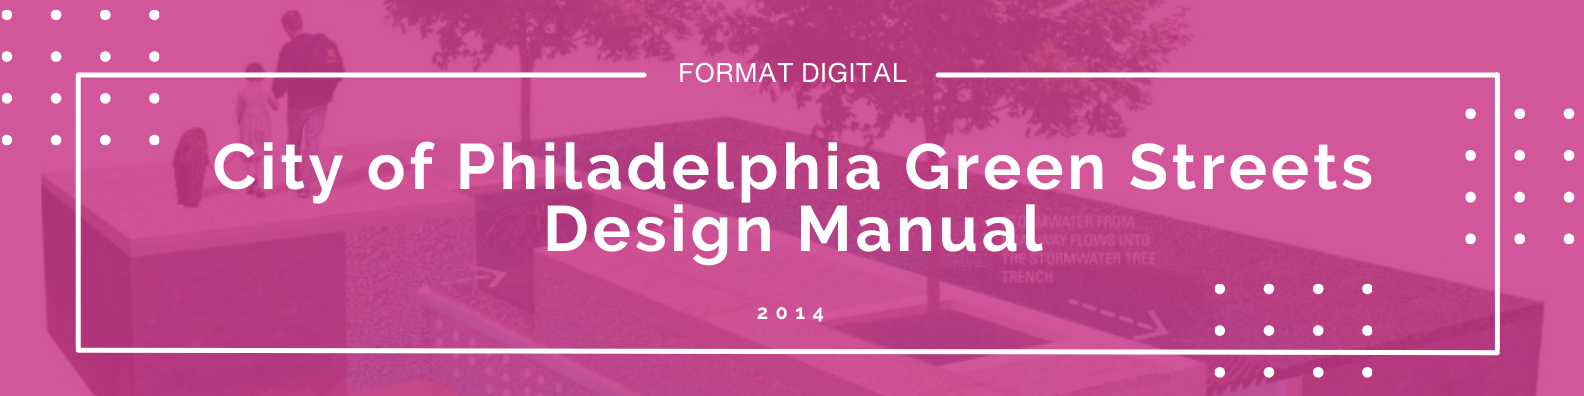 banner City of Philadelphia Green Streets Design Manual